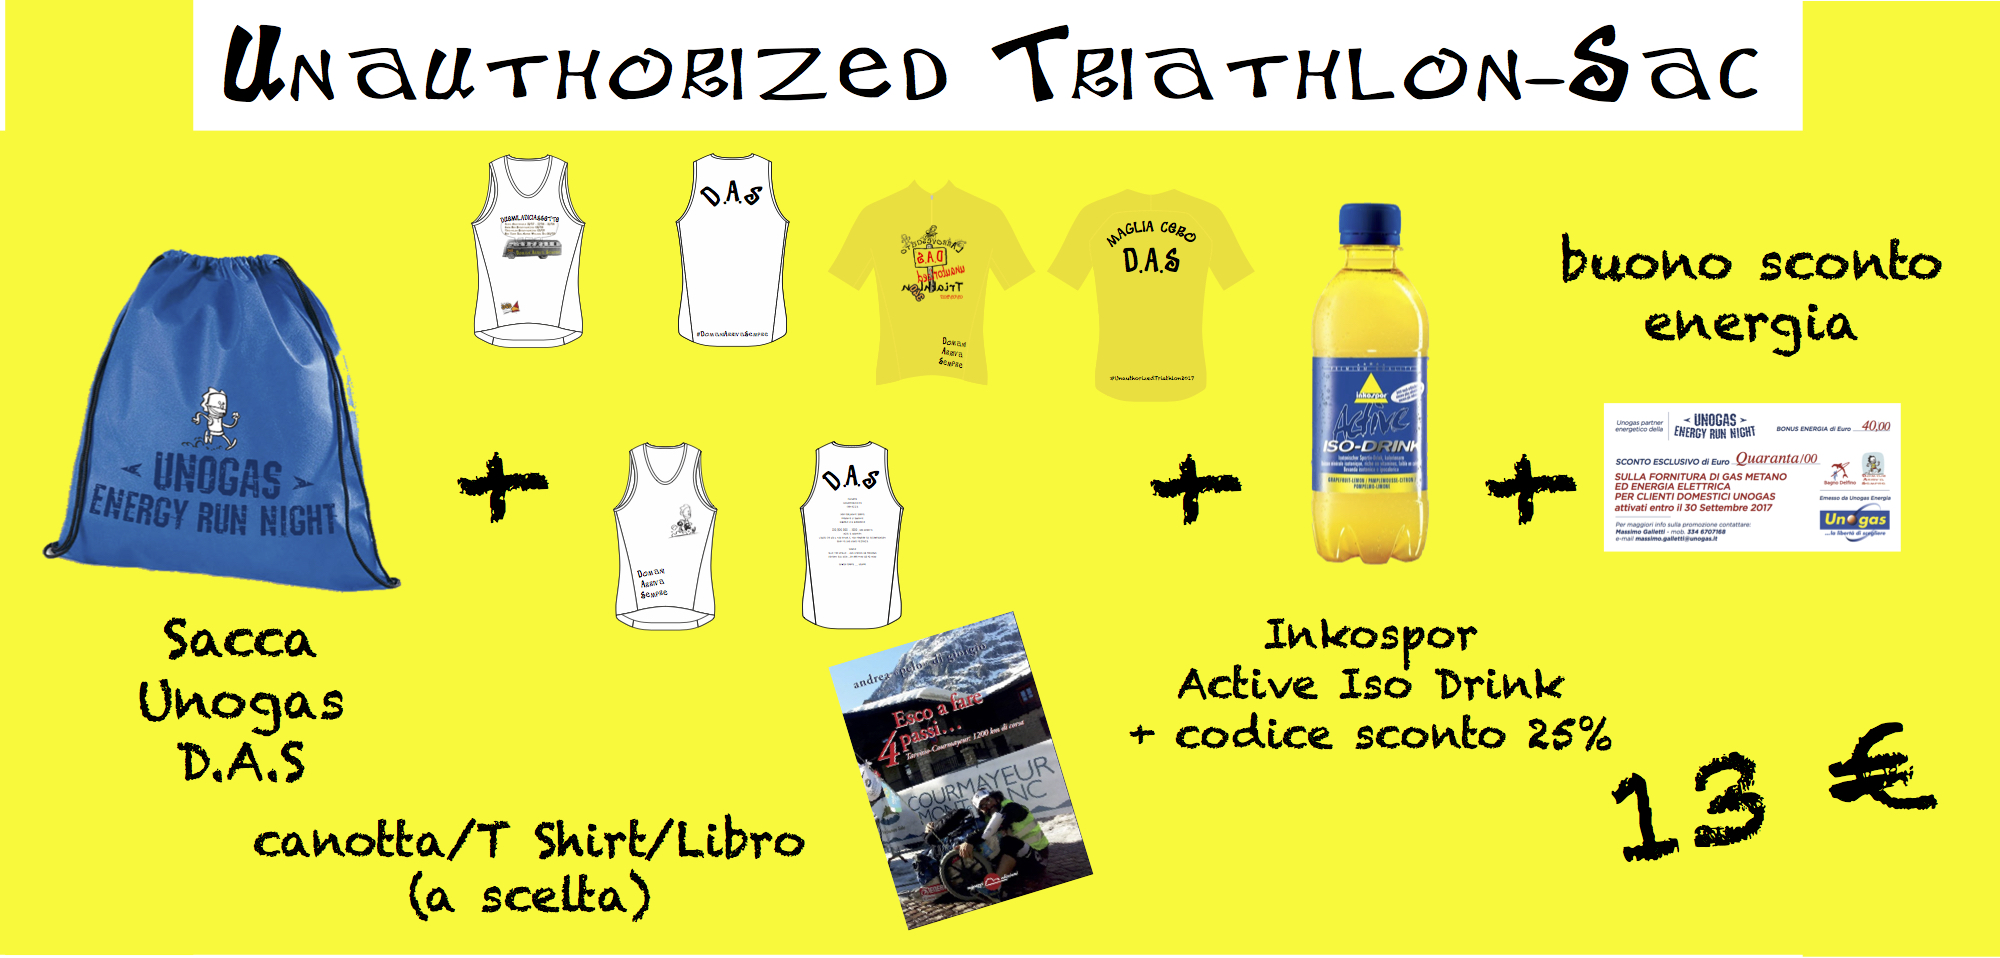 unauthorized triathlon sac